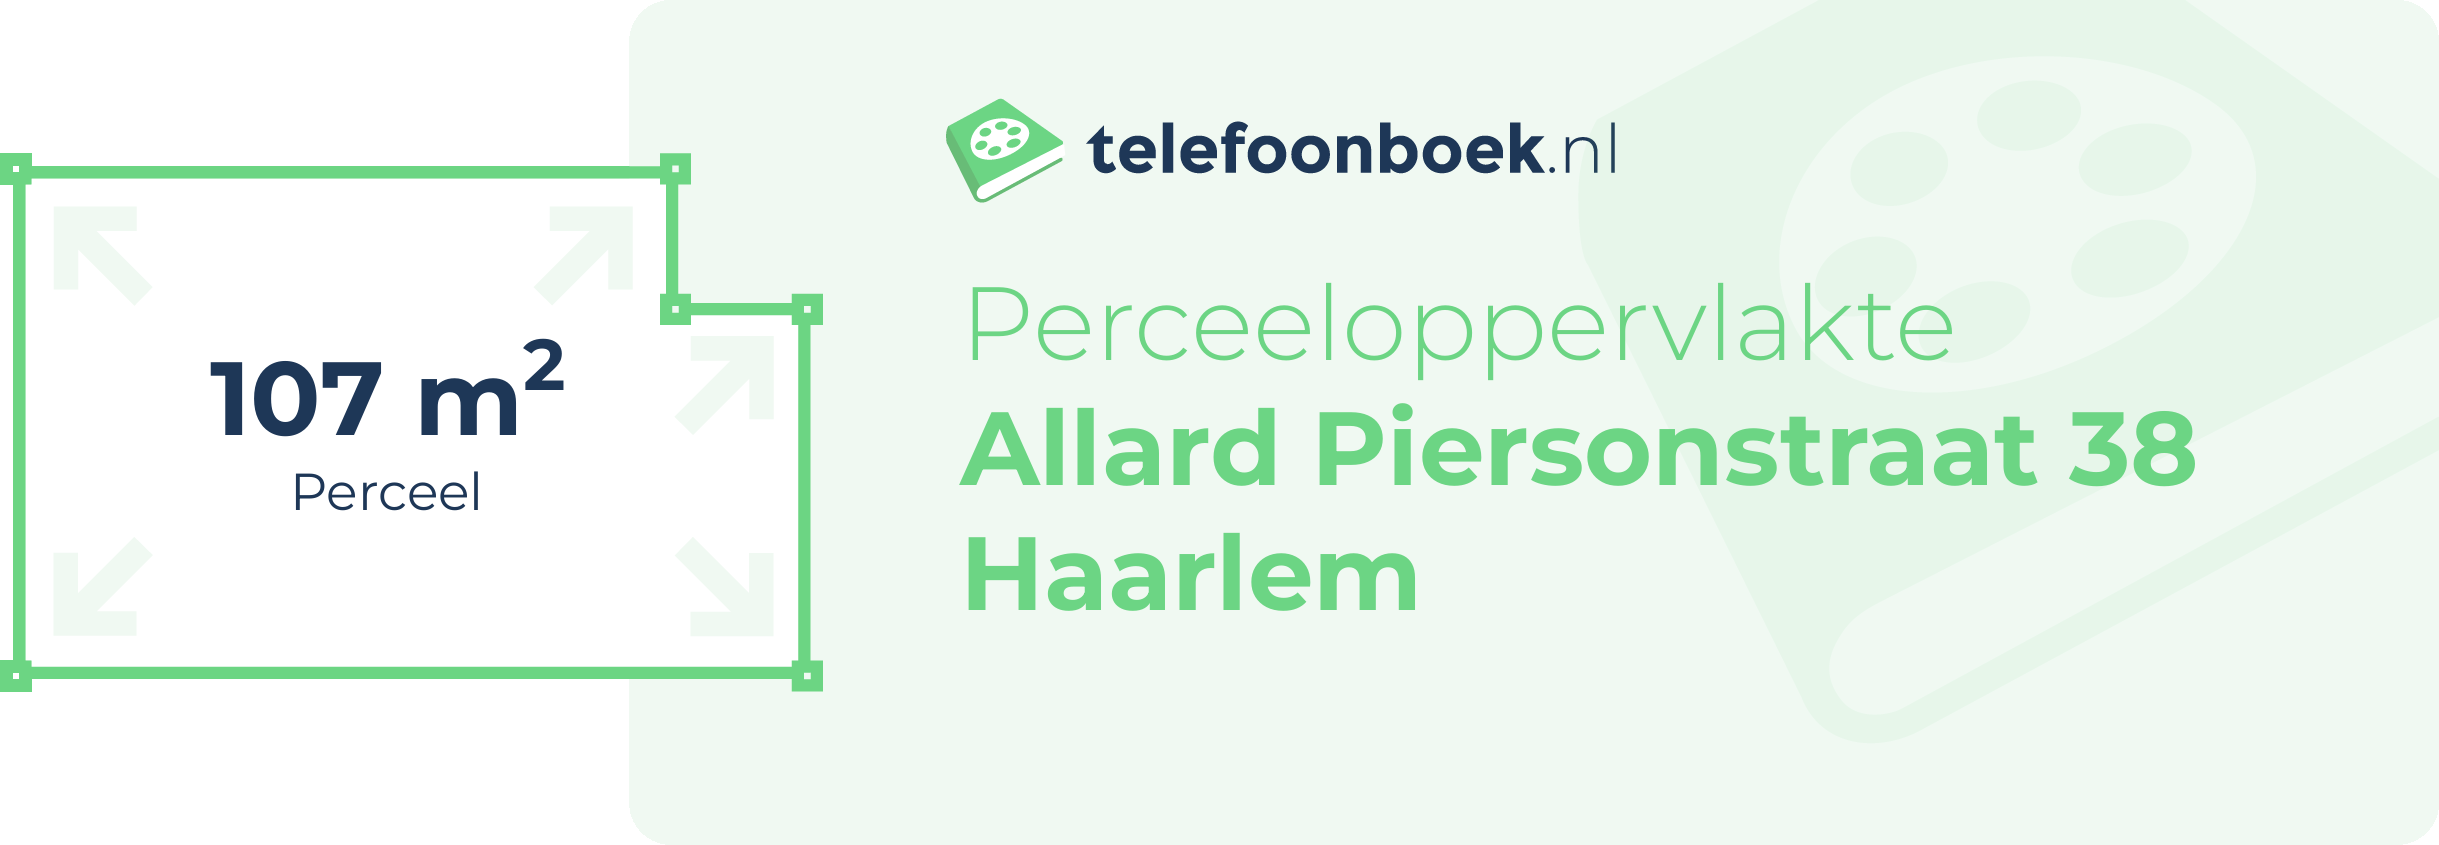 Perceeloppervlakte Allard Piersonstraat 38 Haarlem